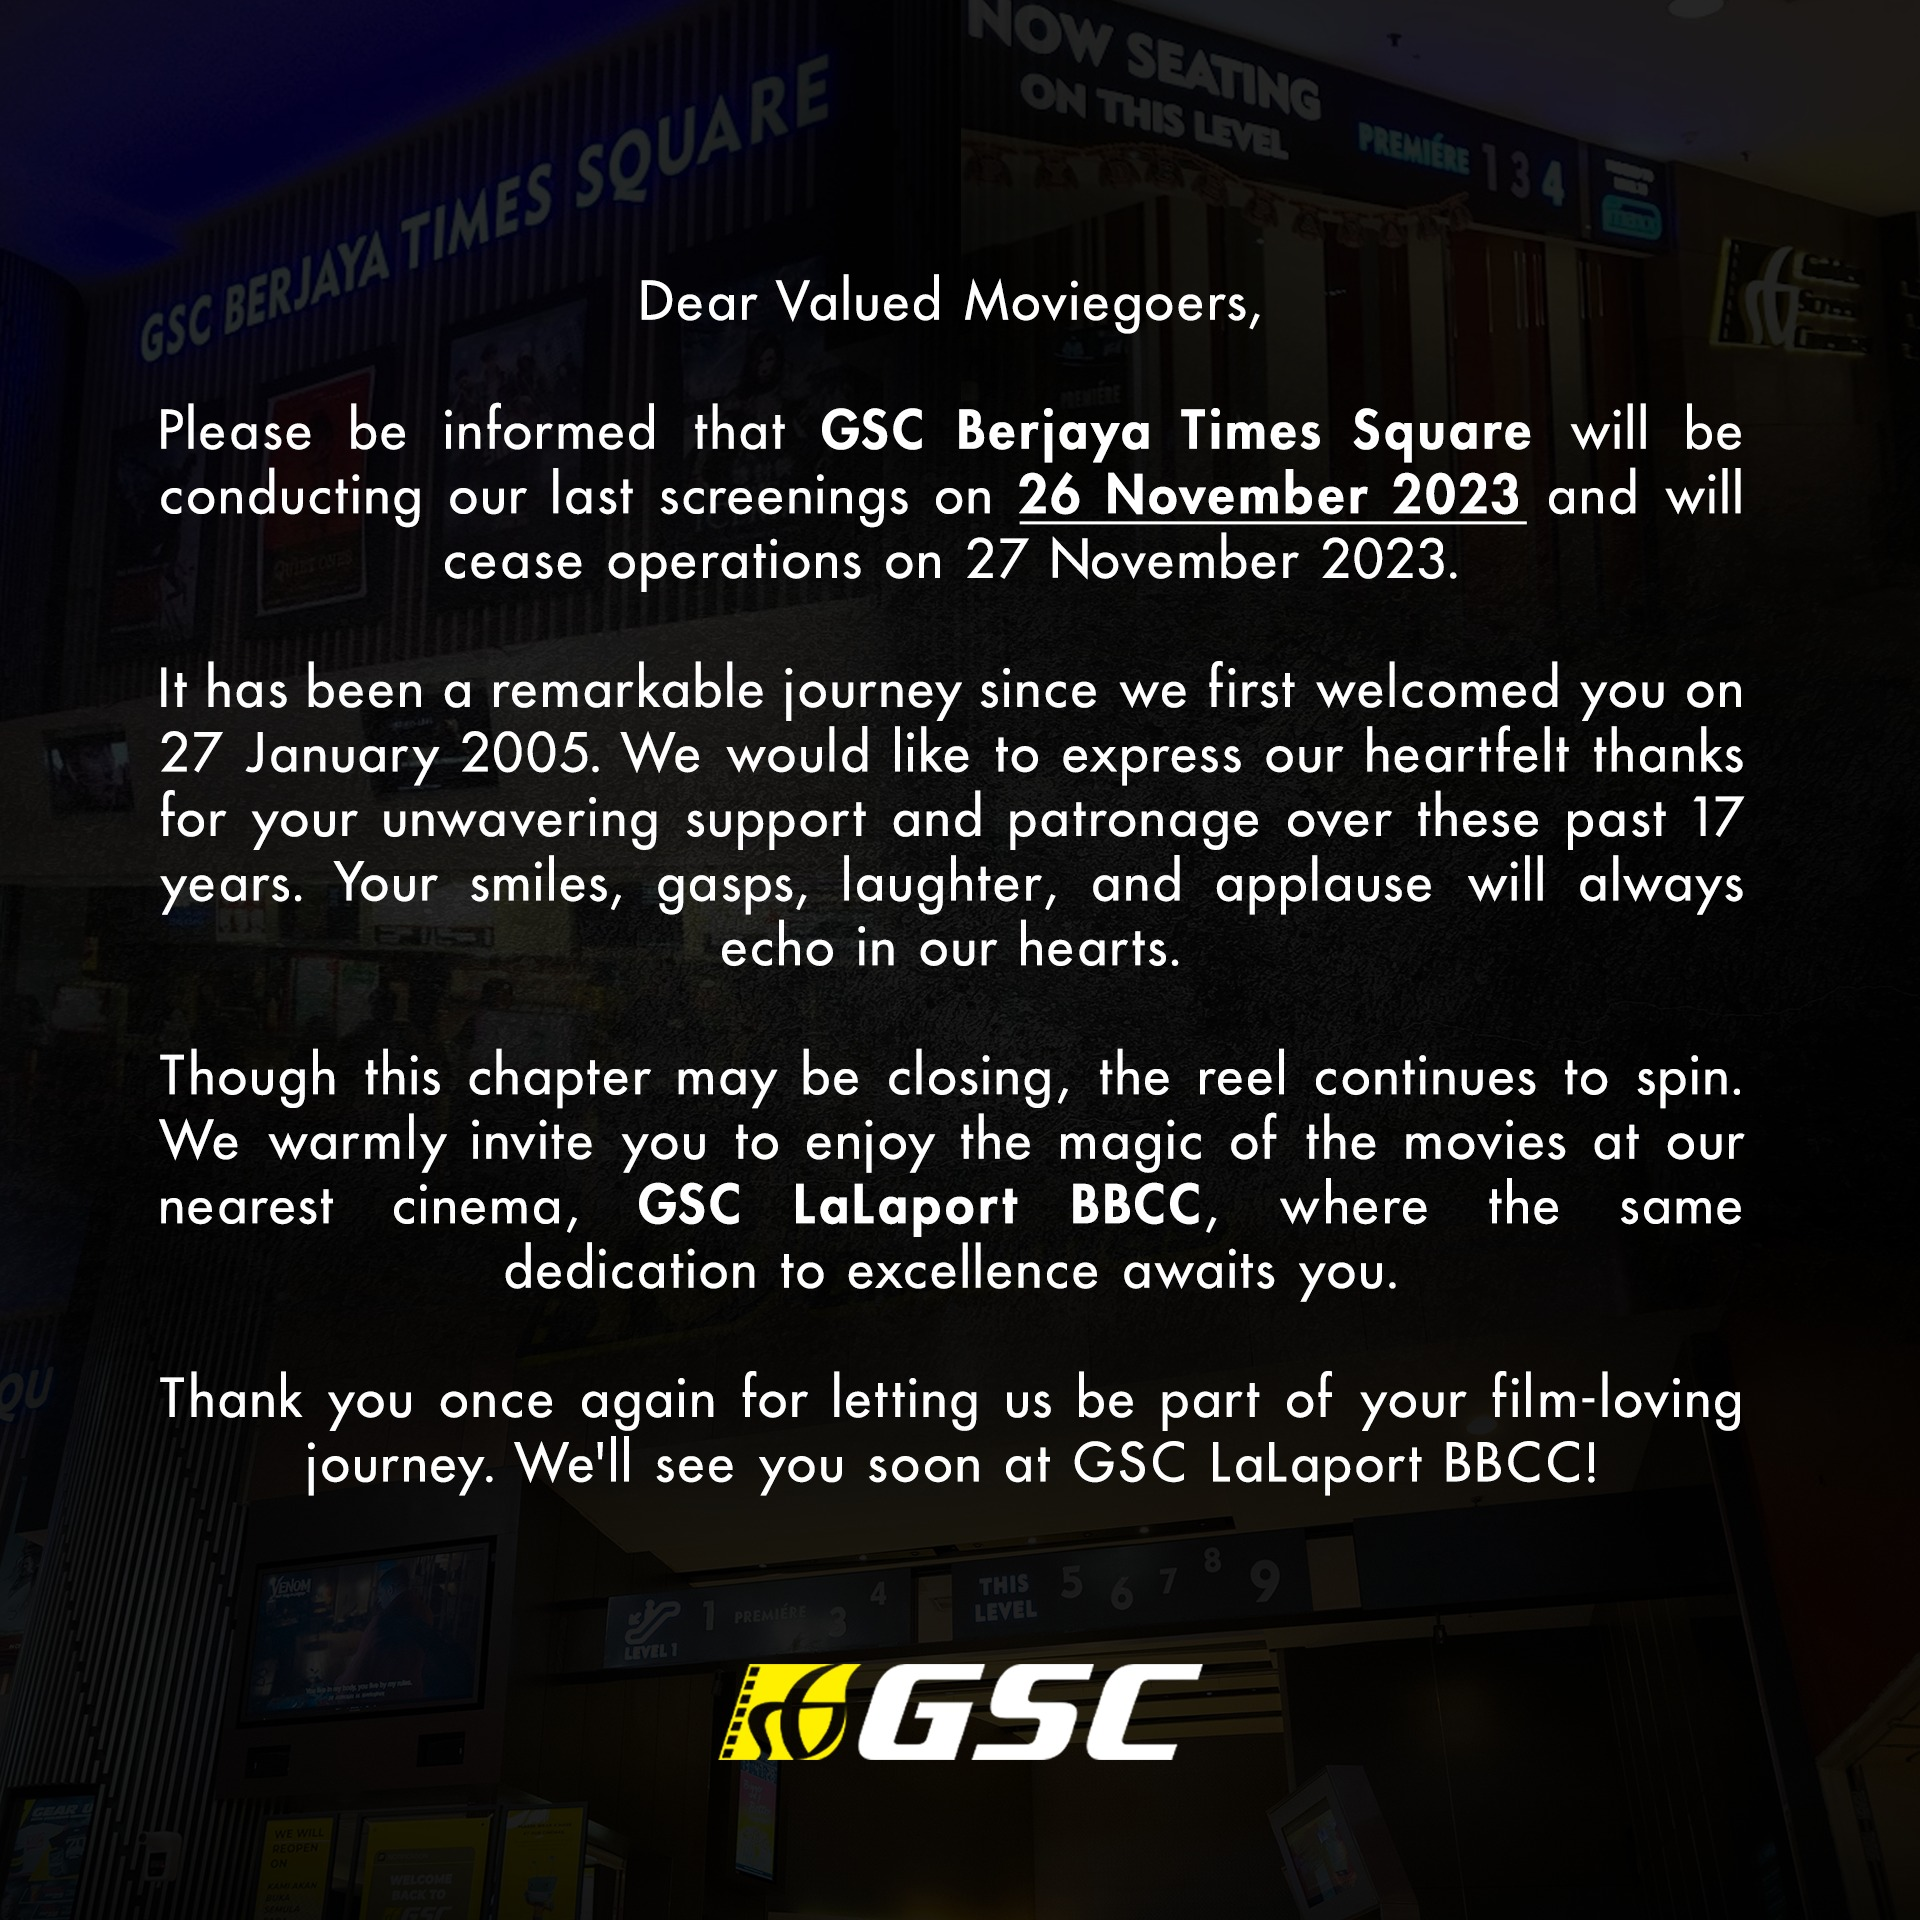 Gsc berjaya times square announces shutdown after 17 years, sparks netizens' memories | weirdkaya